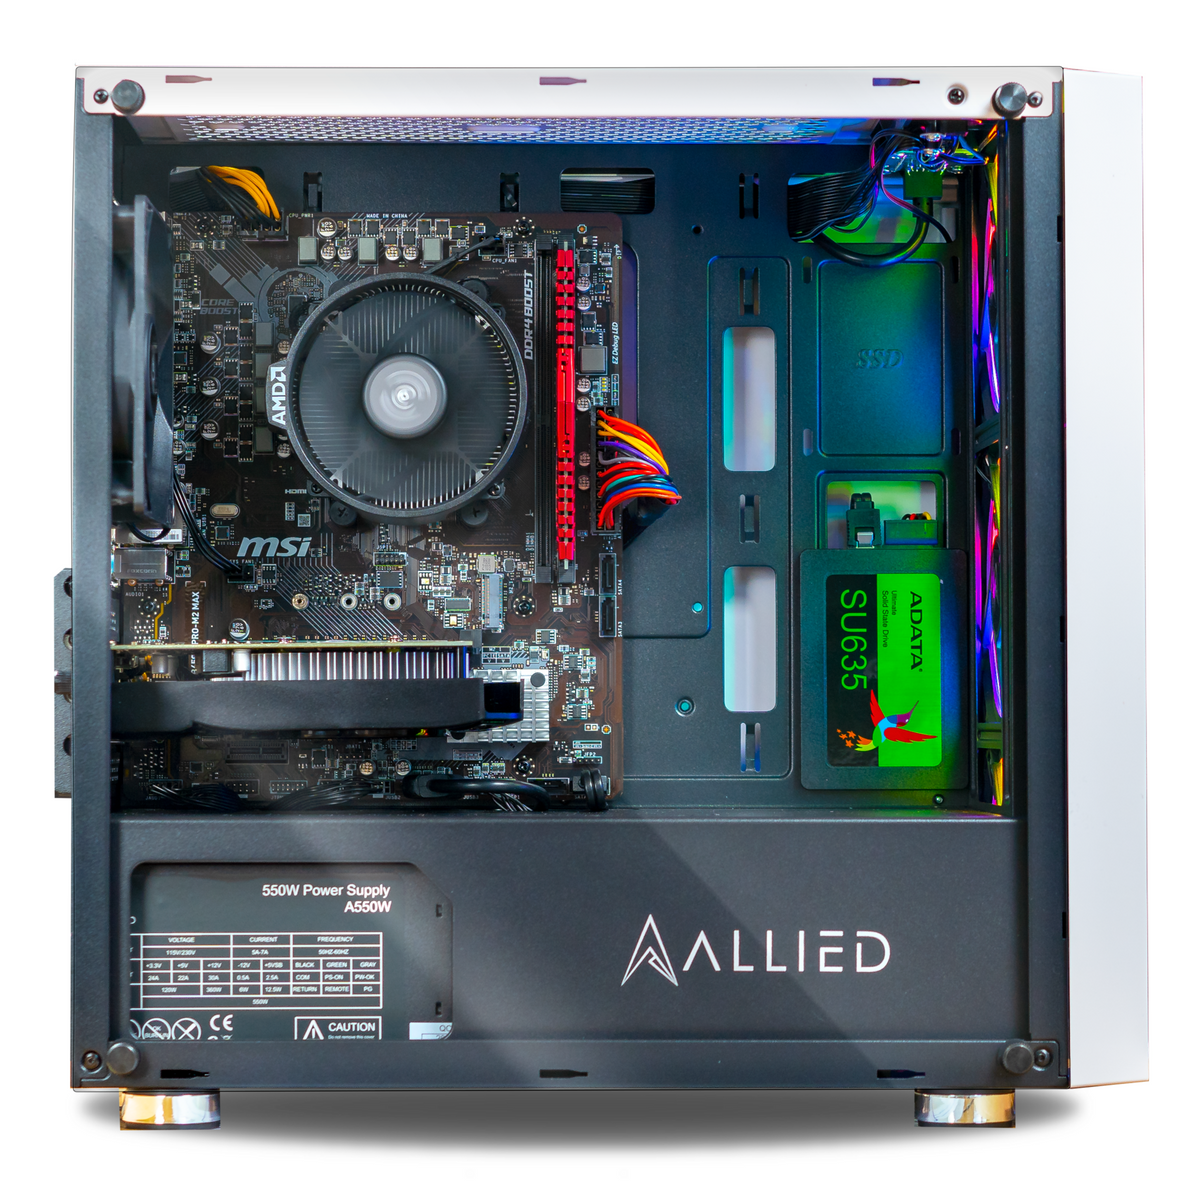 Allied Stinger-A: AMD Ryzen 5 1600 | Nvidia GTX 1650 Gaming PC